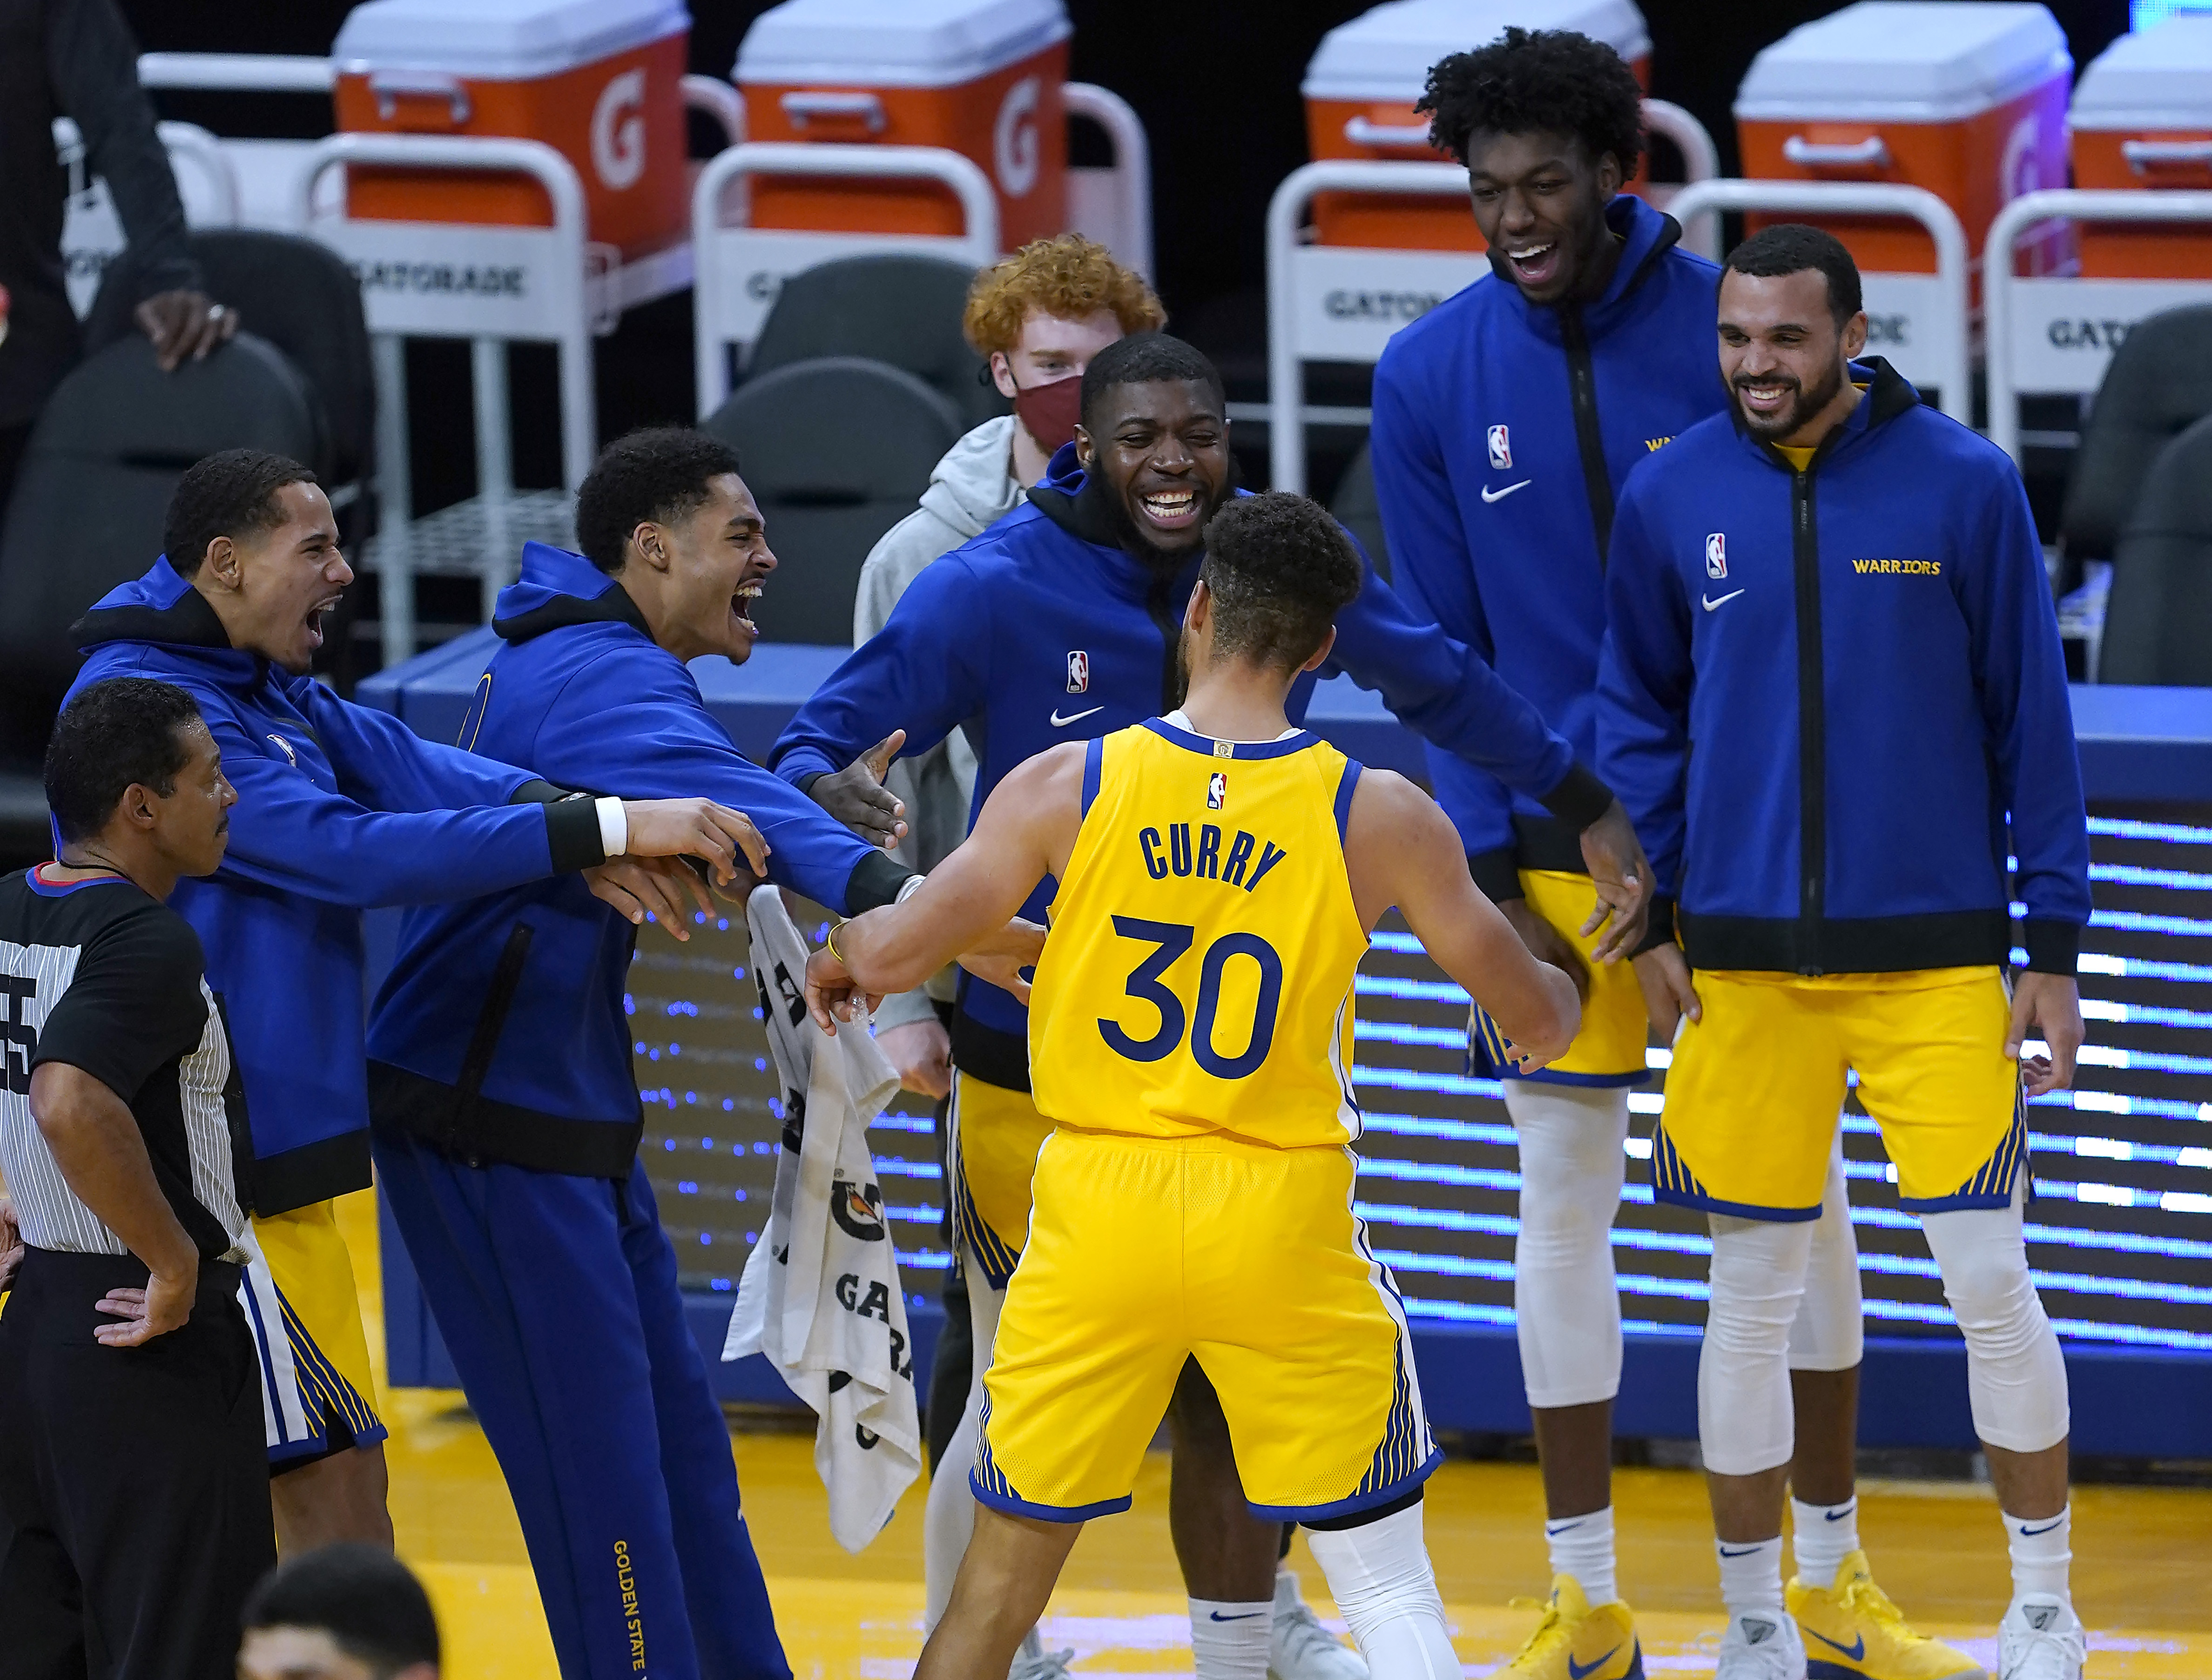 Stephen Curry has career-high 62, Warriors beat Blazers